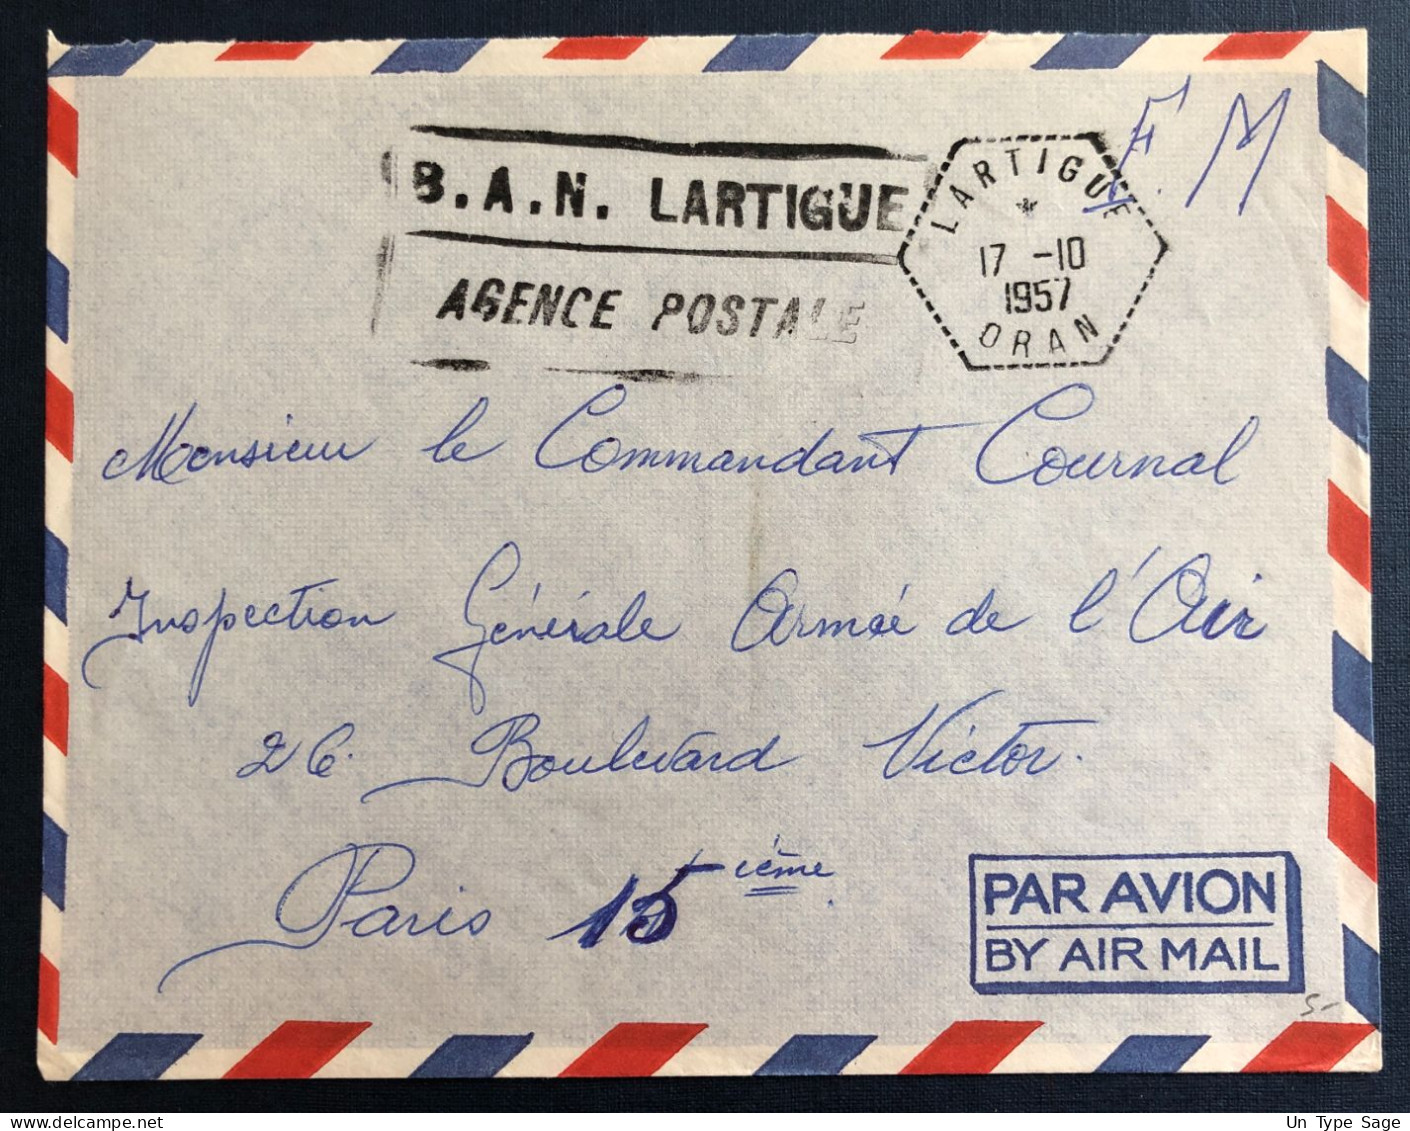 Algérie, Sur Enveloppe TAD Lartigue, Oran 17.10.1957 + Griffe B.A.N. LARTIGUE / AGENCE POSTALE - (B3349) - Storia Postale